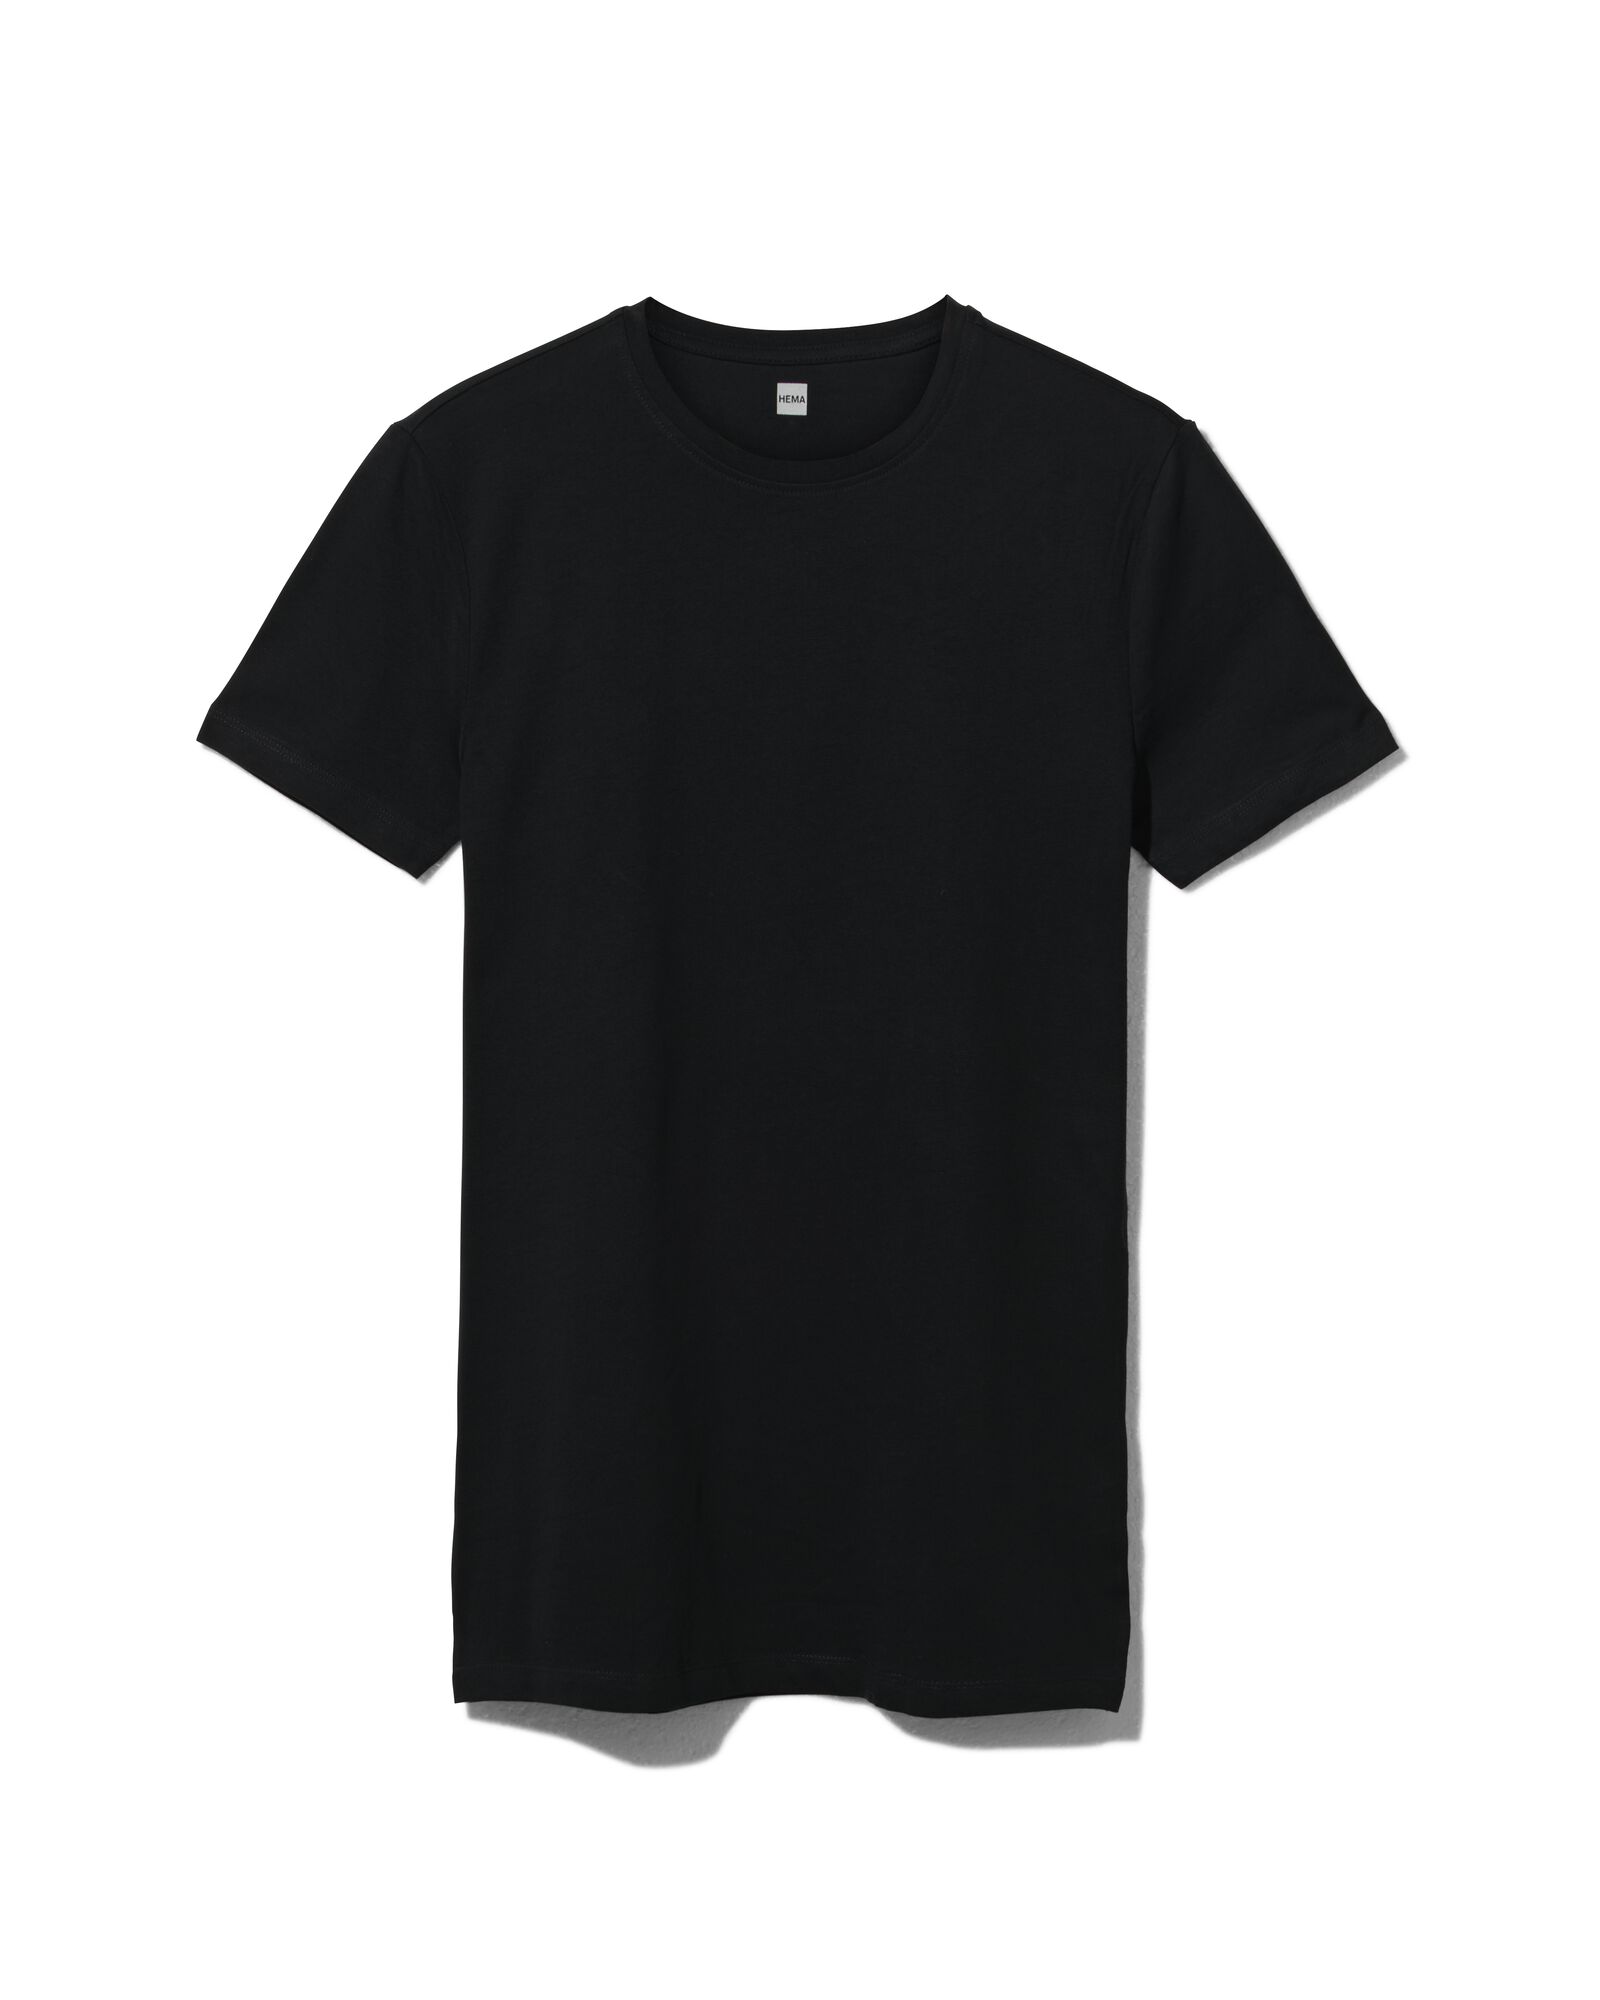 heren t-shirt regular fit o-hals extra lang - 2 stuks zwart S - 34277073 - HEMA